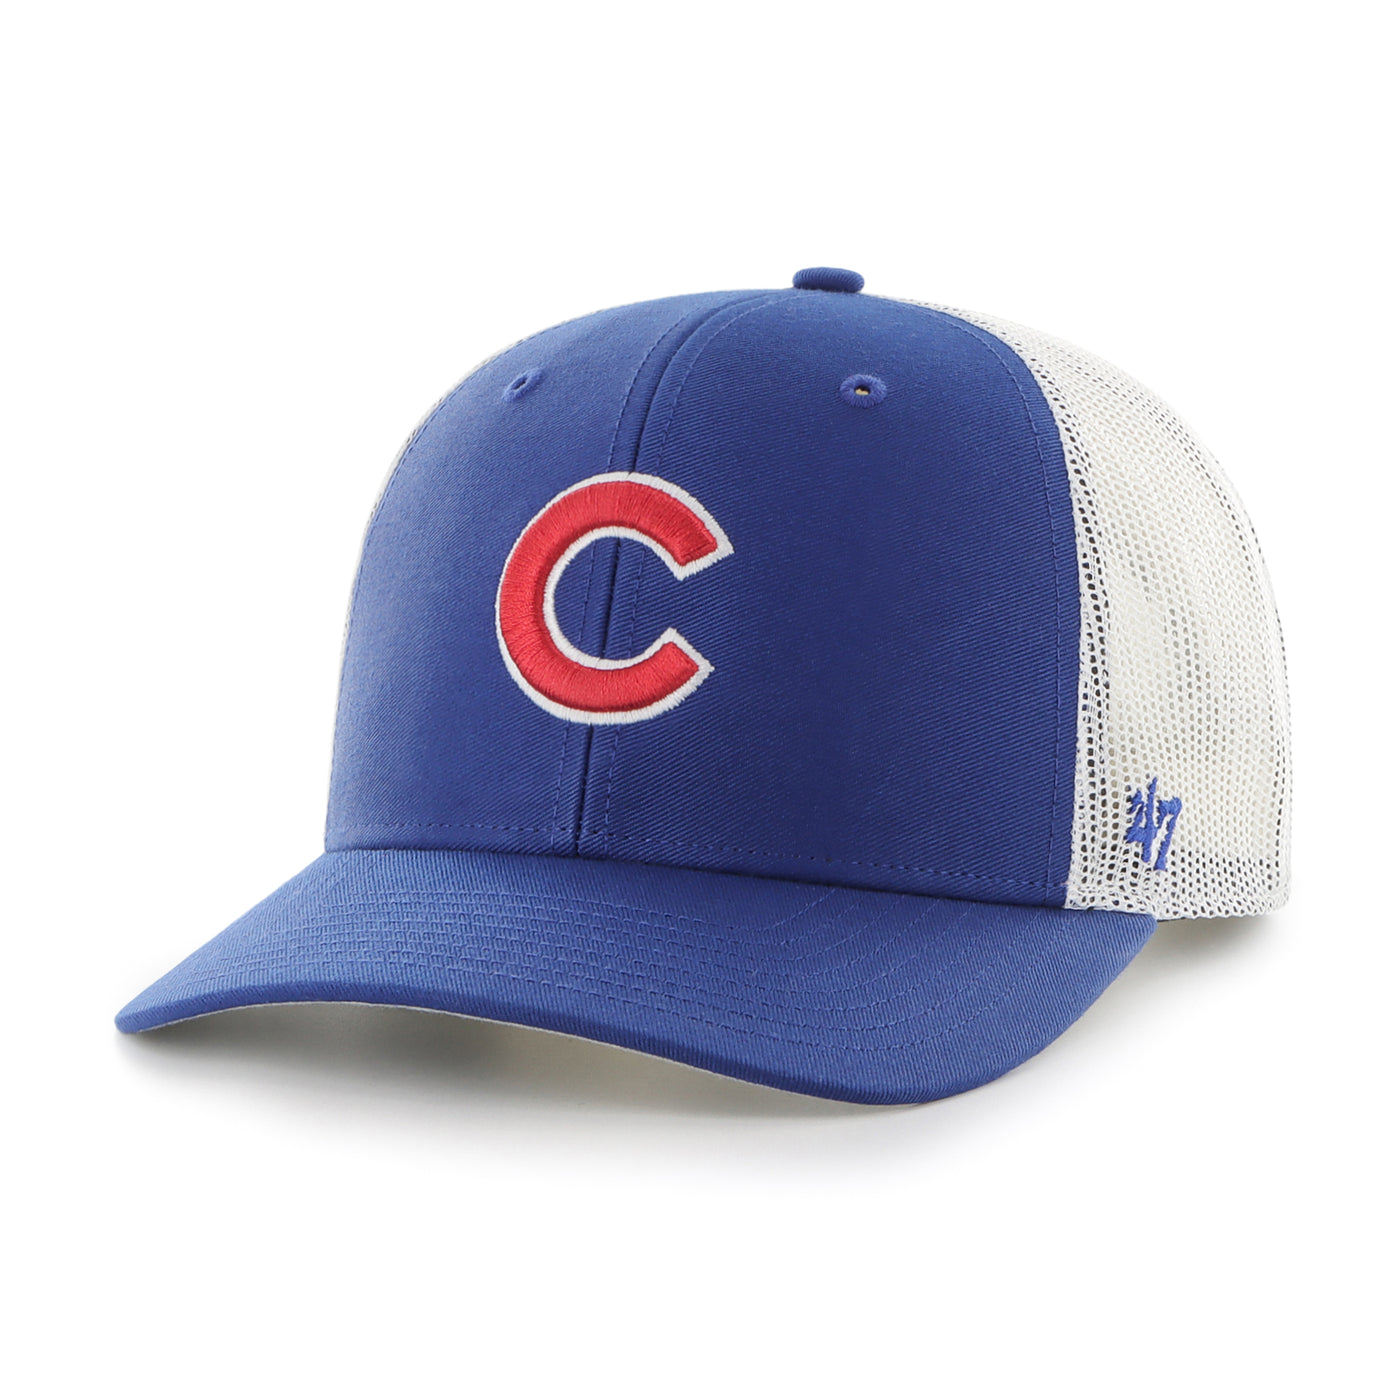 CHICAGO CUBS '47 C LOGO ROYAL BLUE TRUCKER HAT